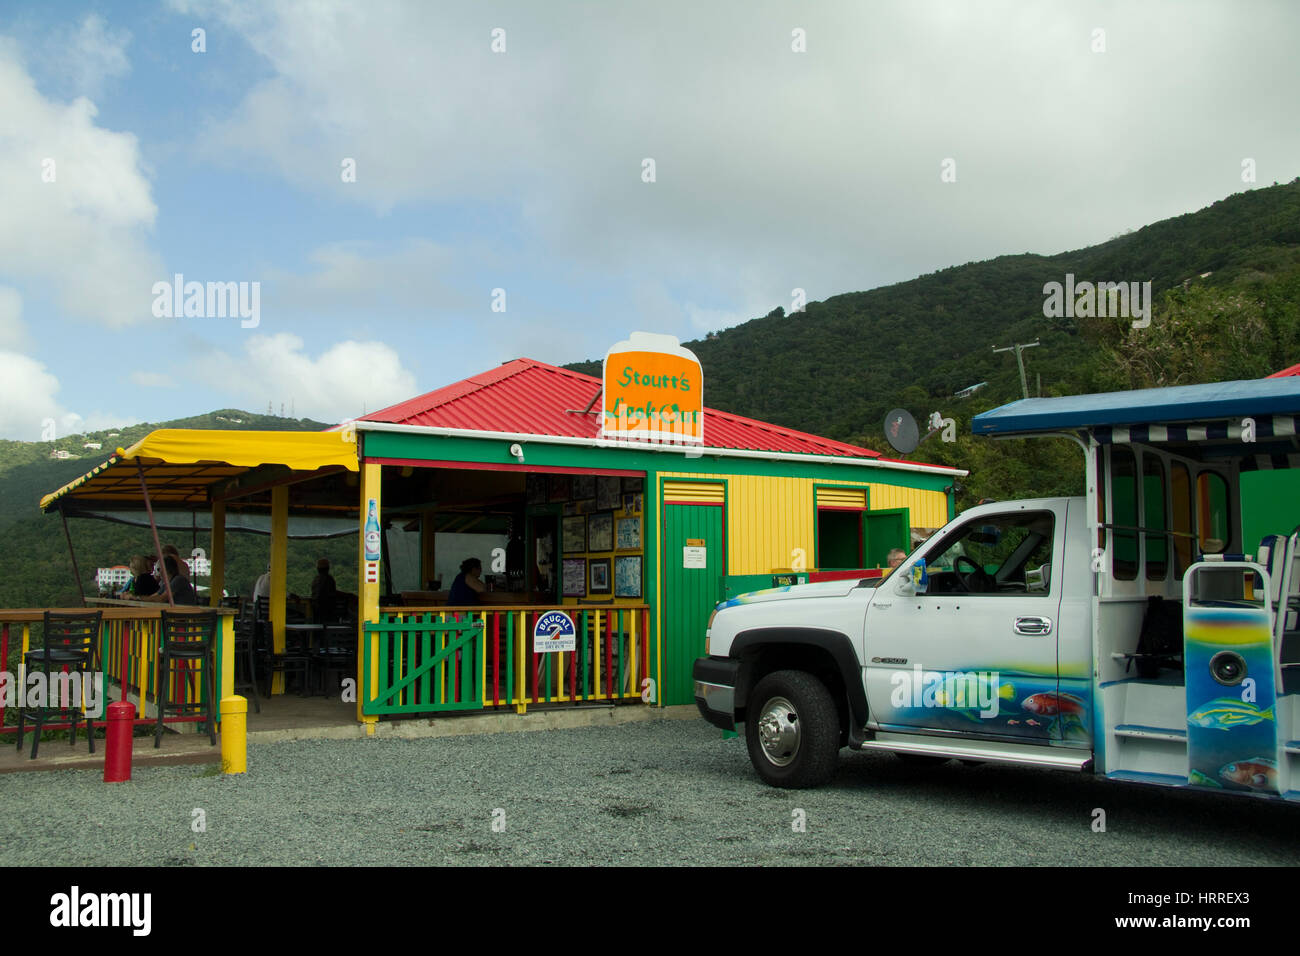 Stouts Lookout Tortola, British Virgin Islands, Caribbean Stock Photo